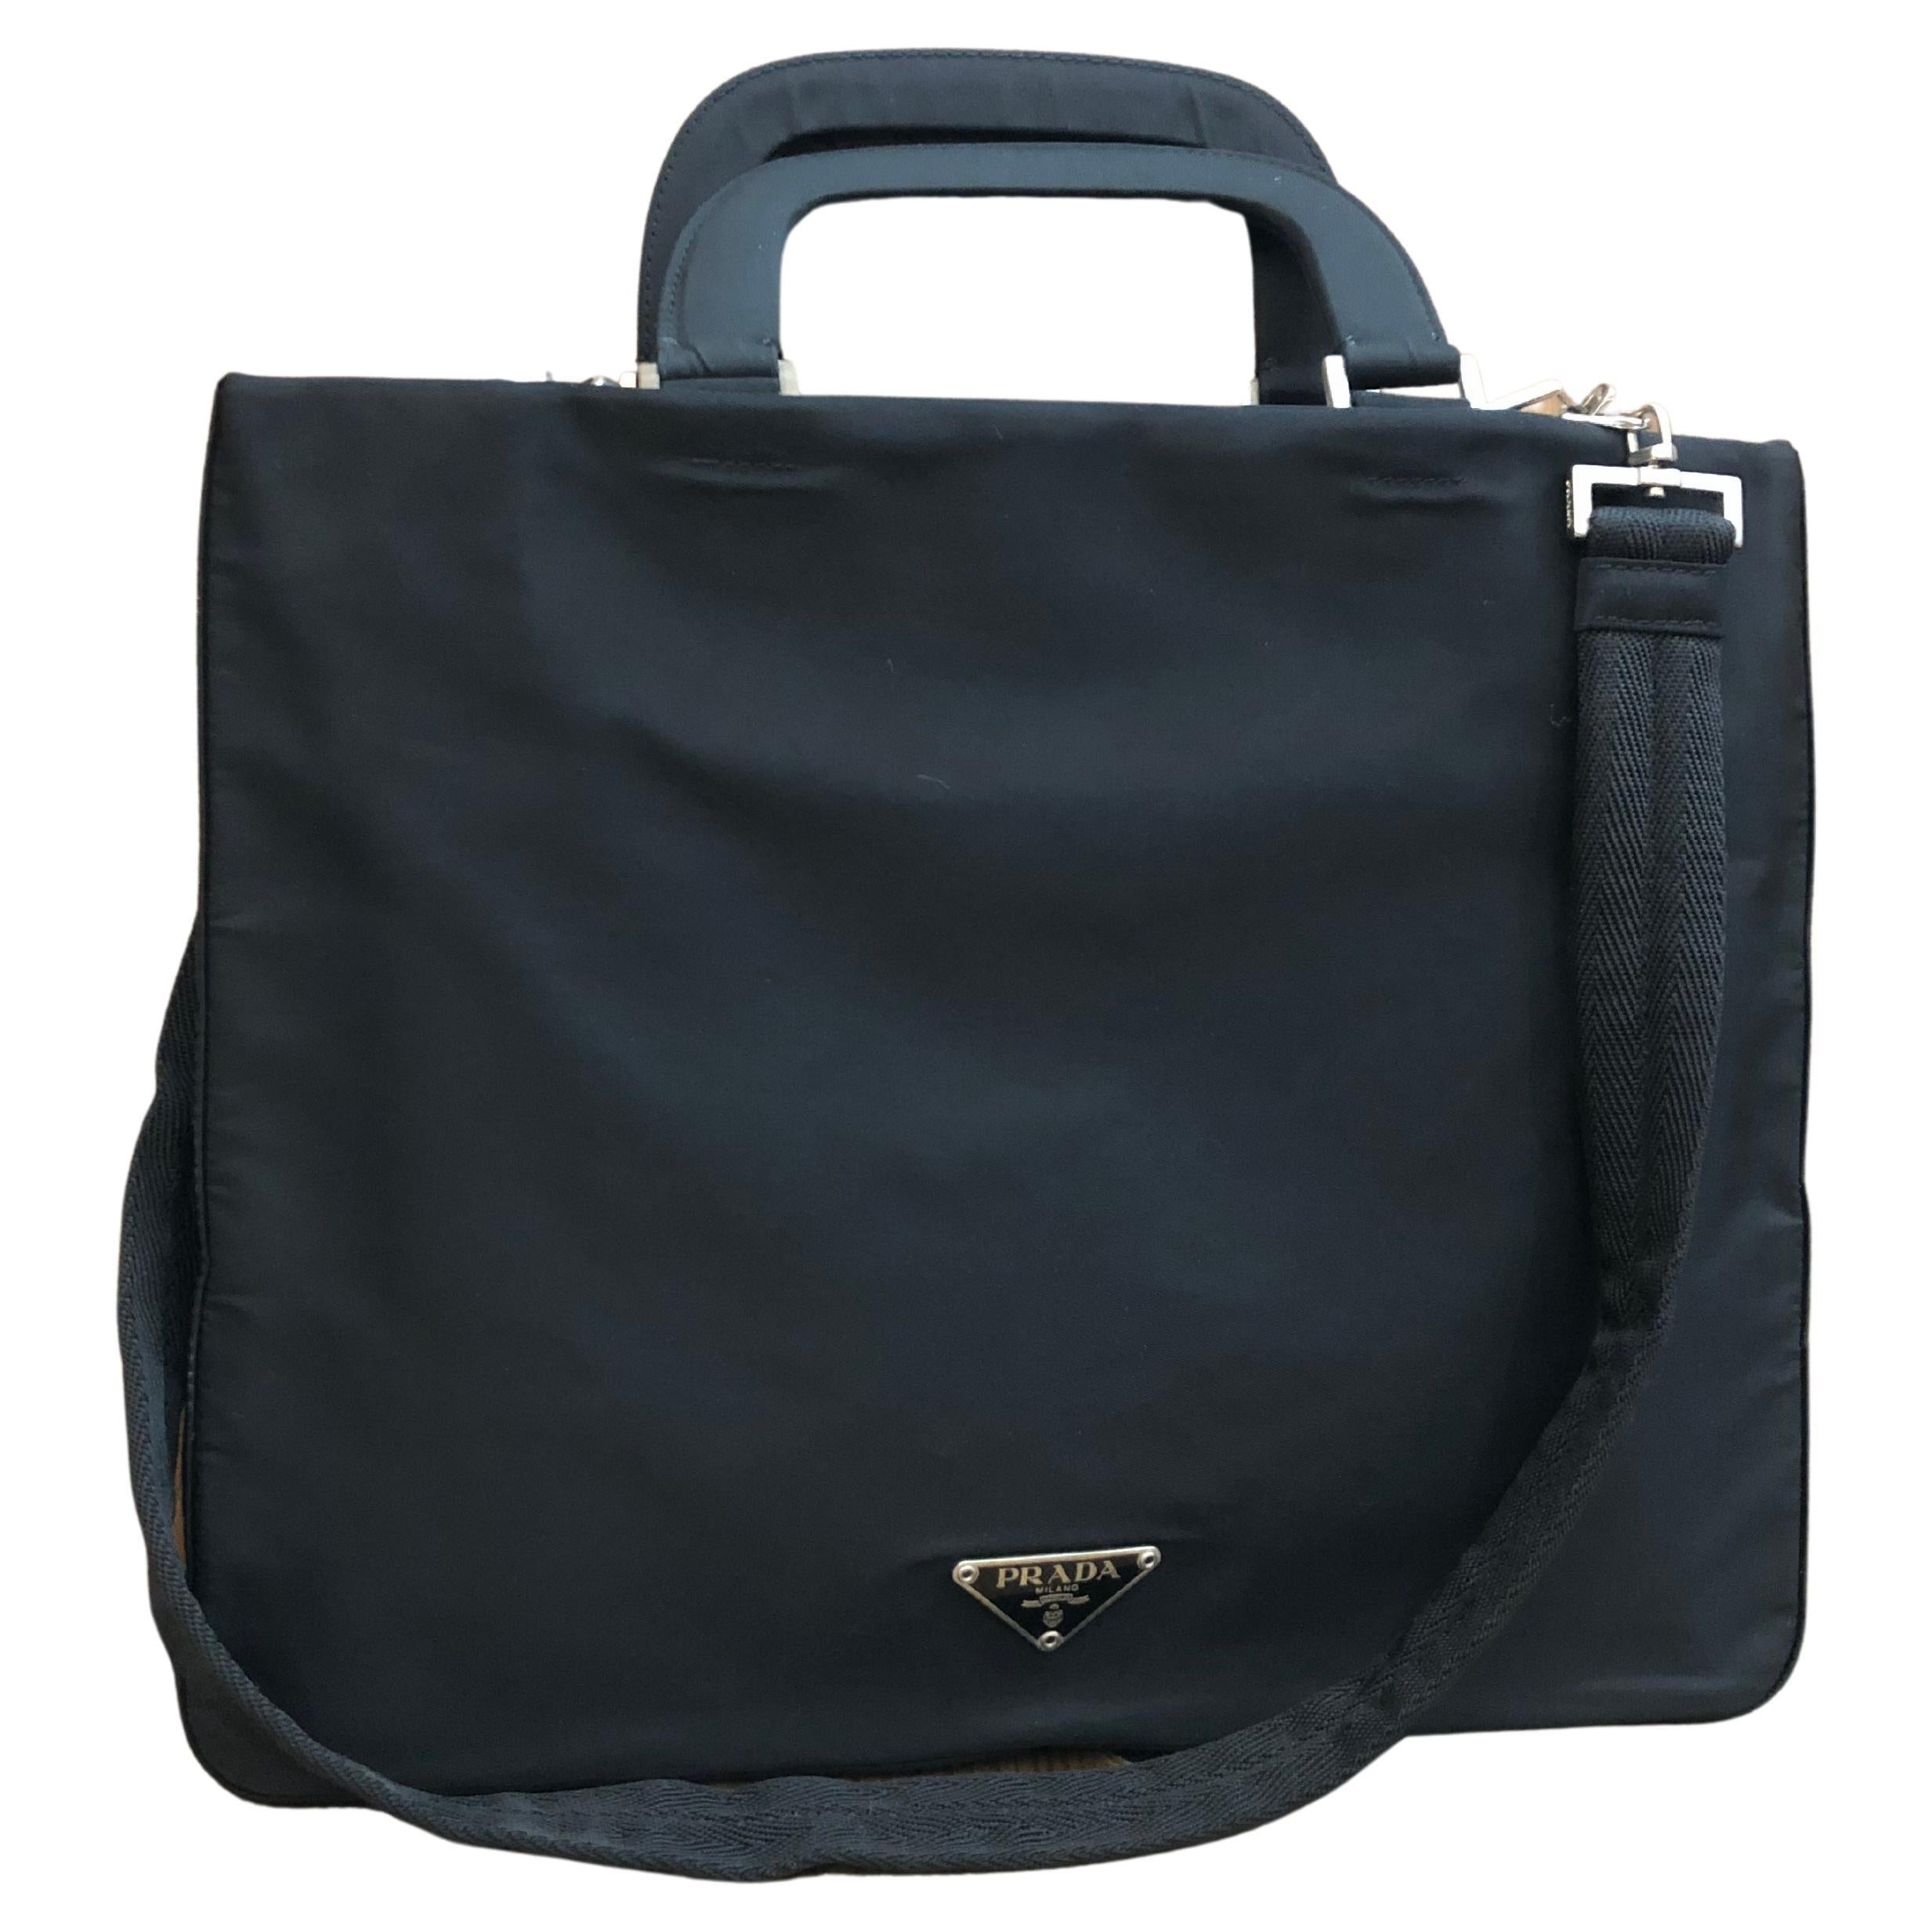 Authentic PRADA Nylon Tote Bag (Black)